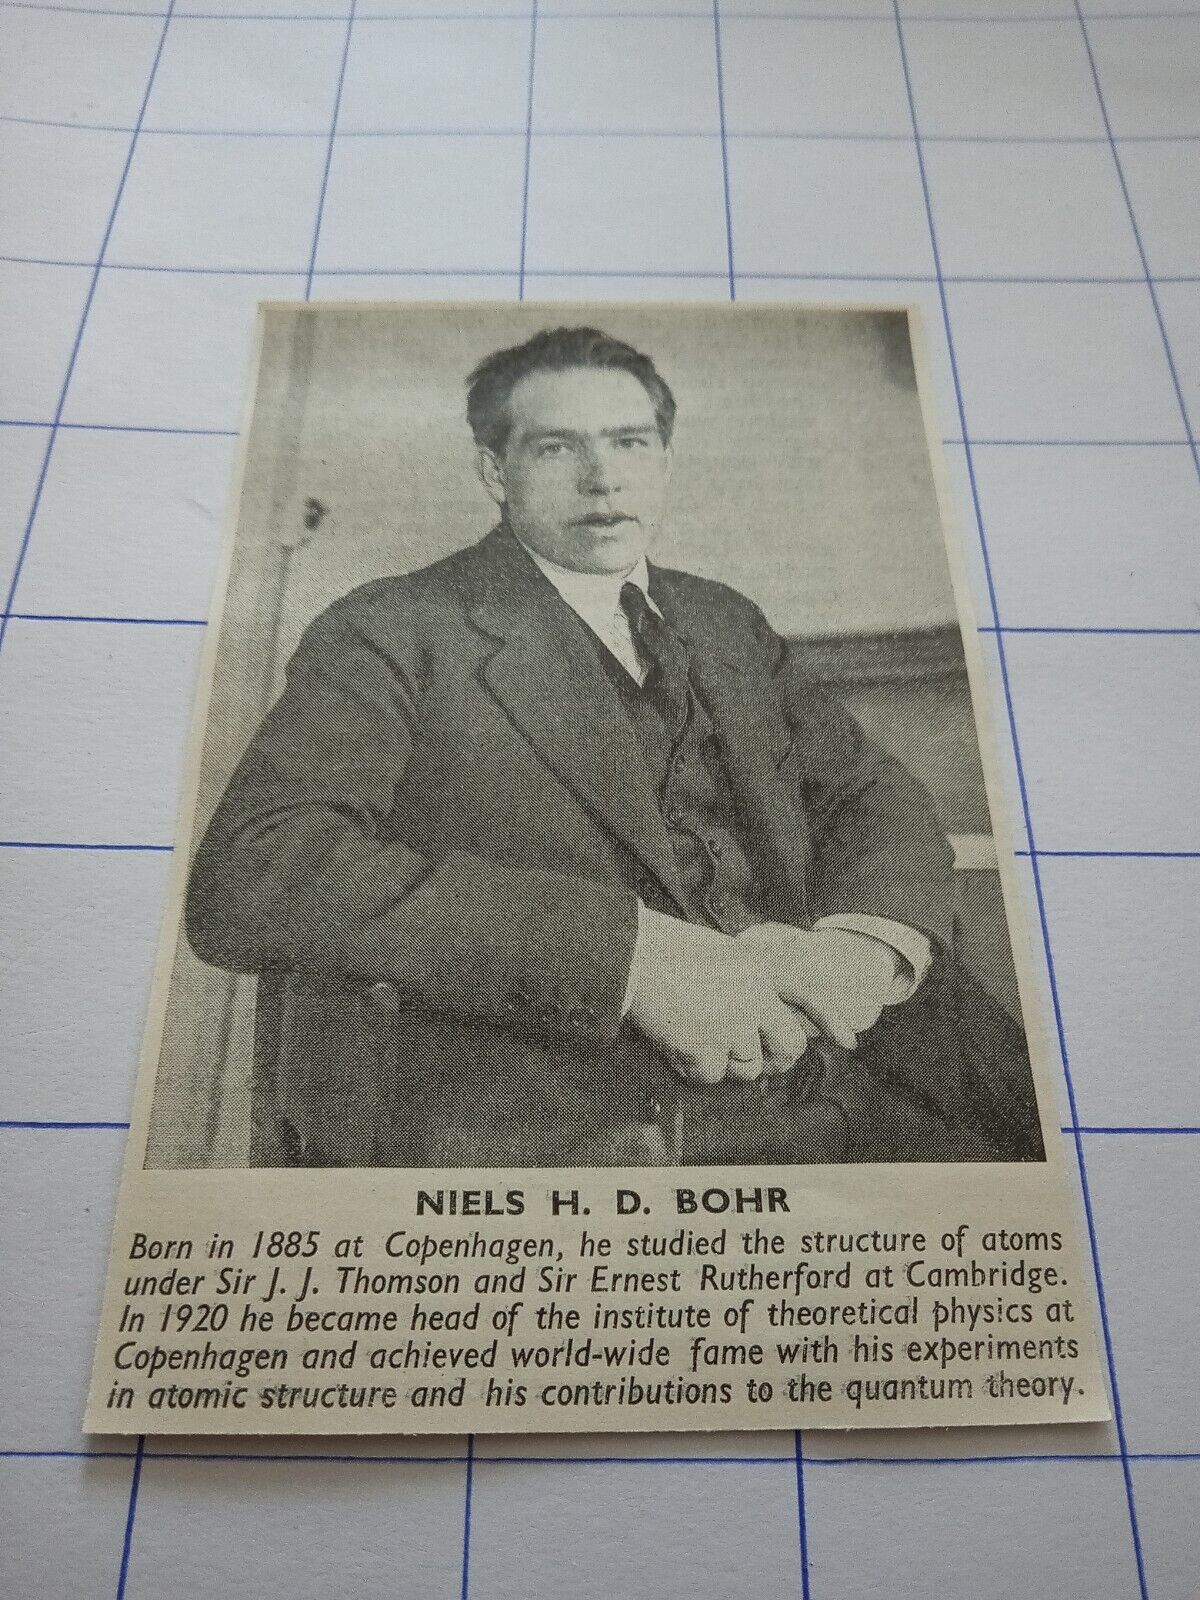 Niels H D BOHR ATOMIC STRUCTURE OF ATOMS THEORETICAL PHYSICS COPENHAGEN 1930s